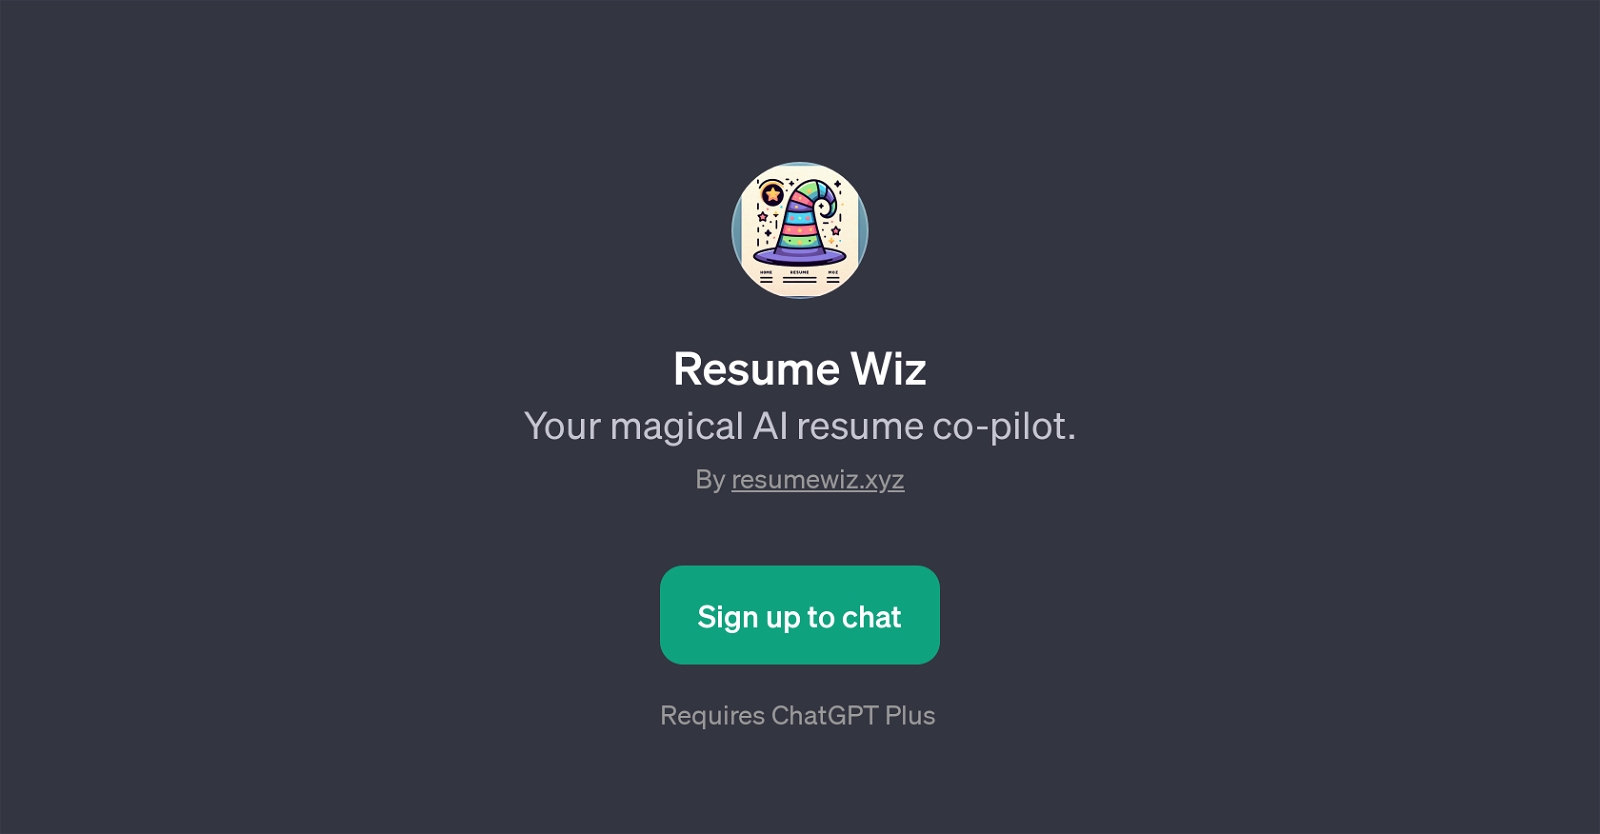 Resume Wiz website